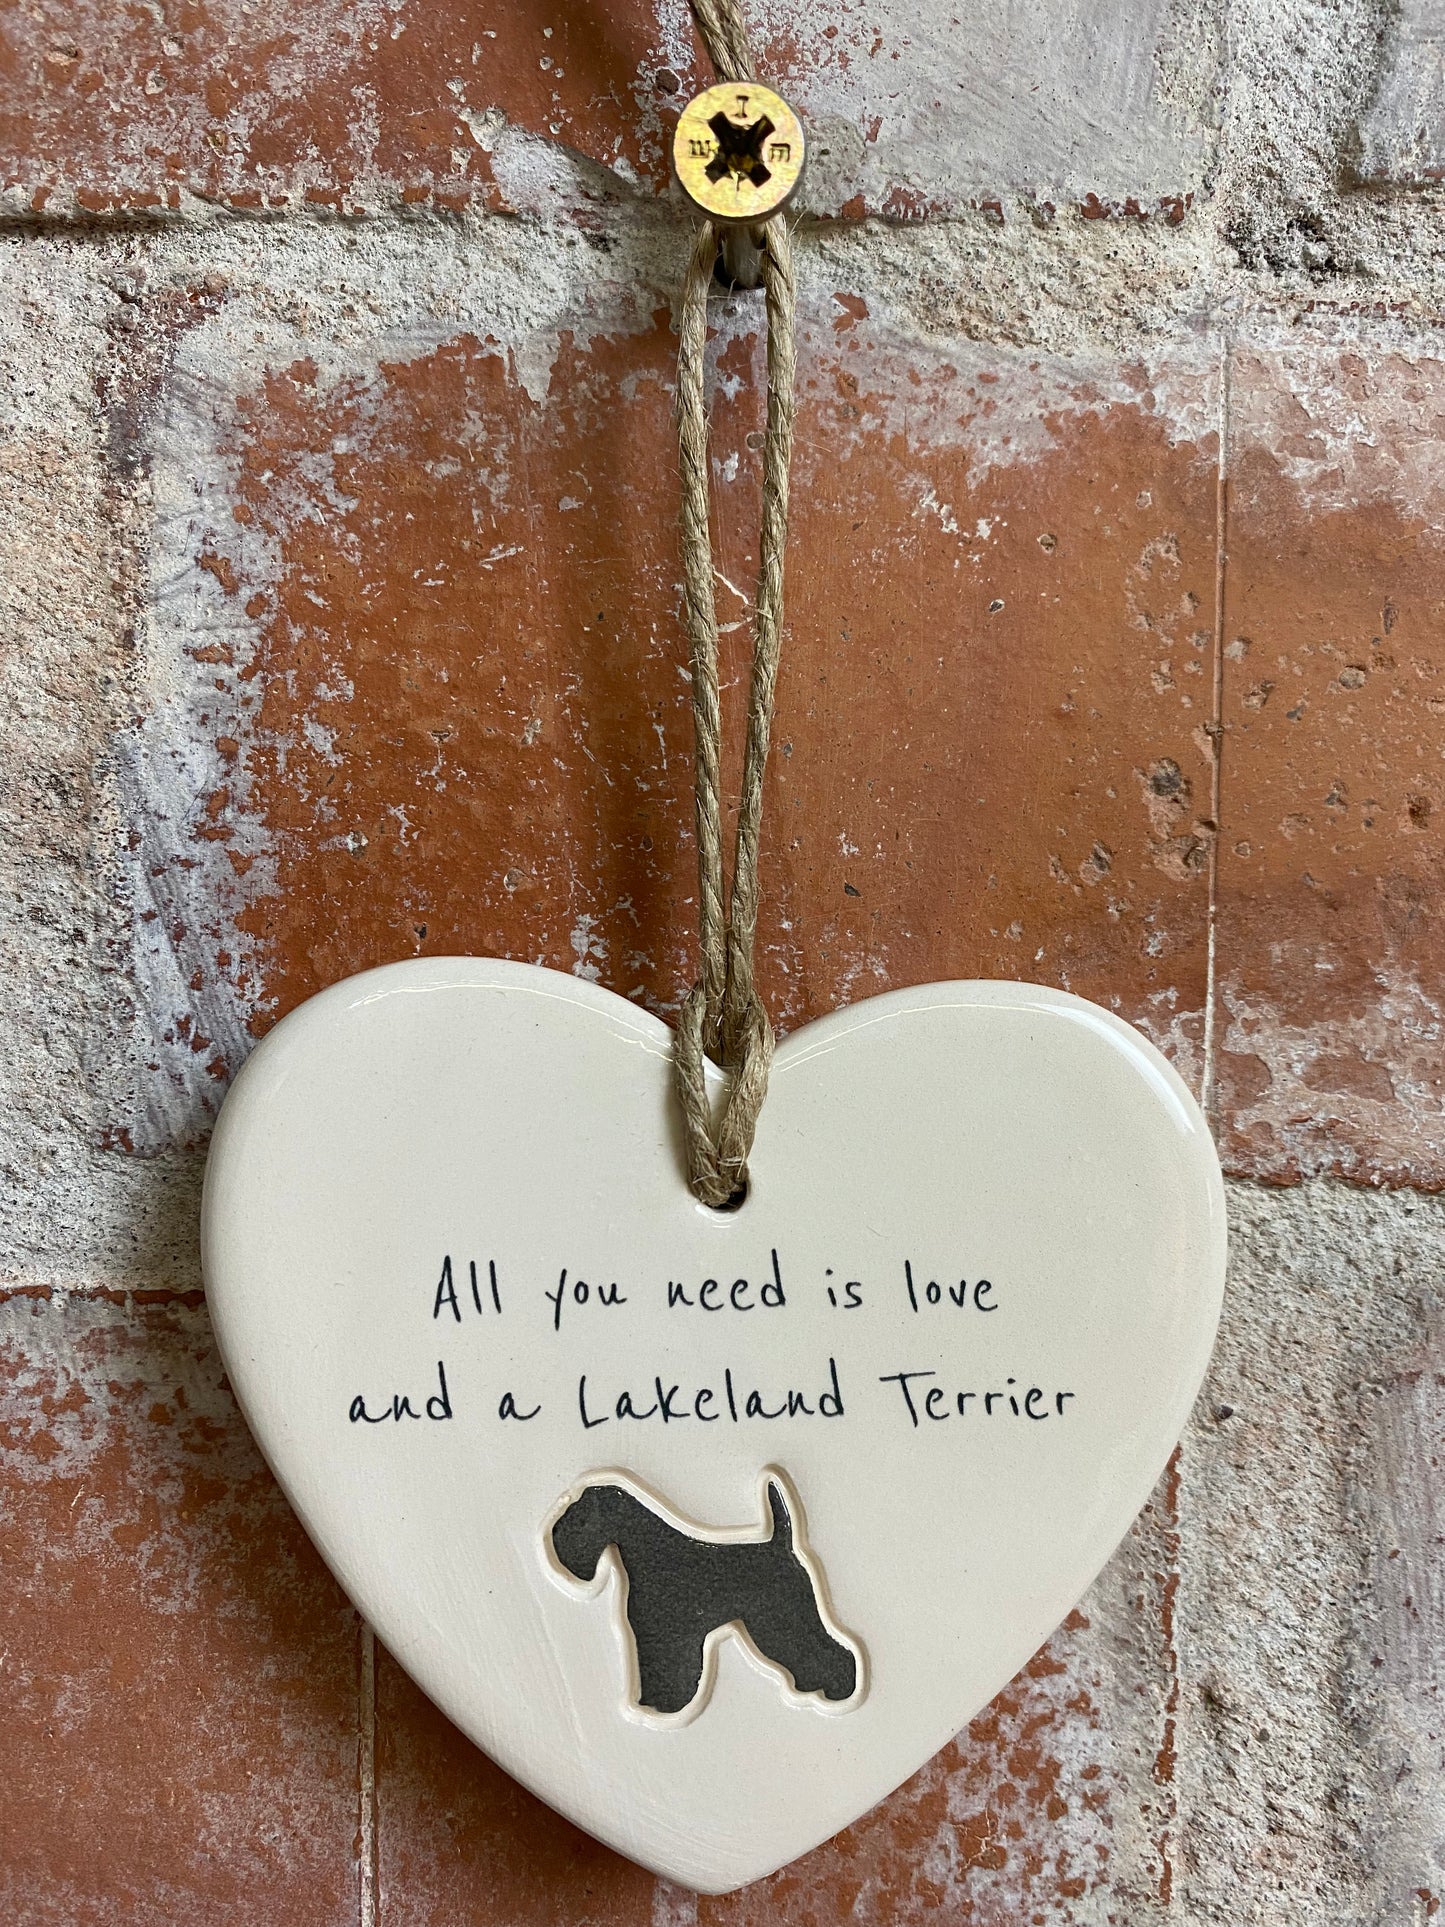 Lakeland Terrier ceramic heart